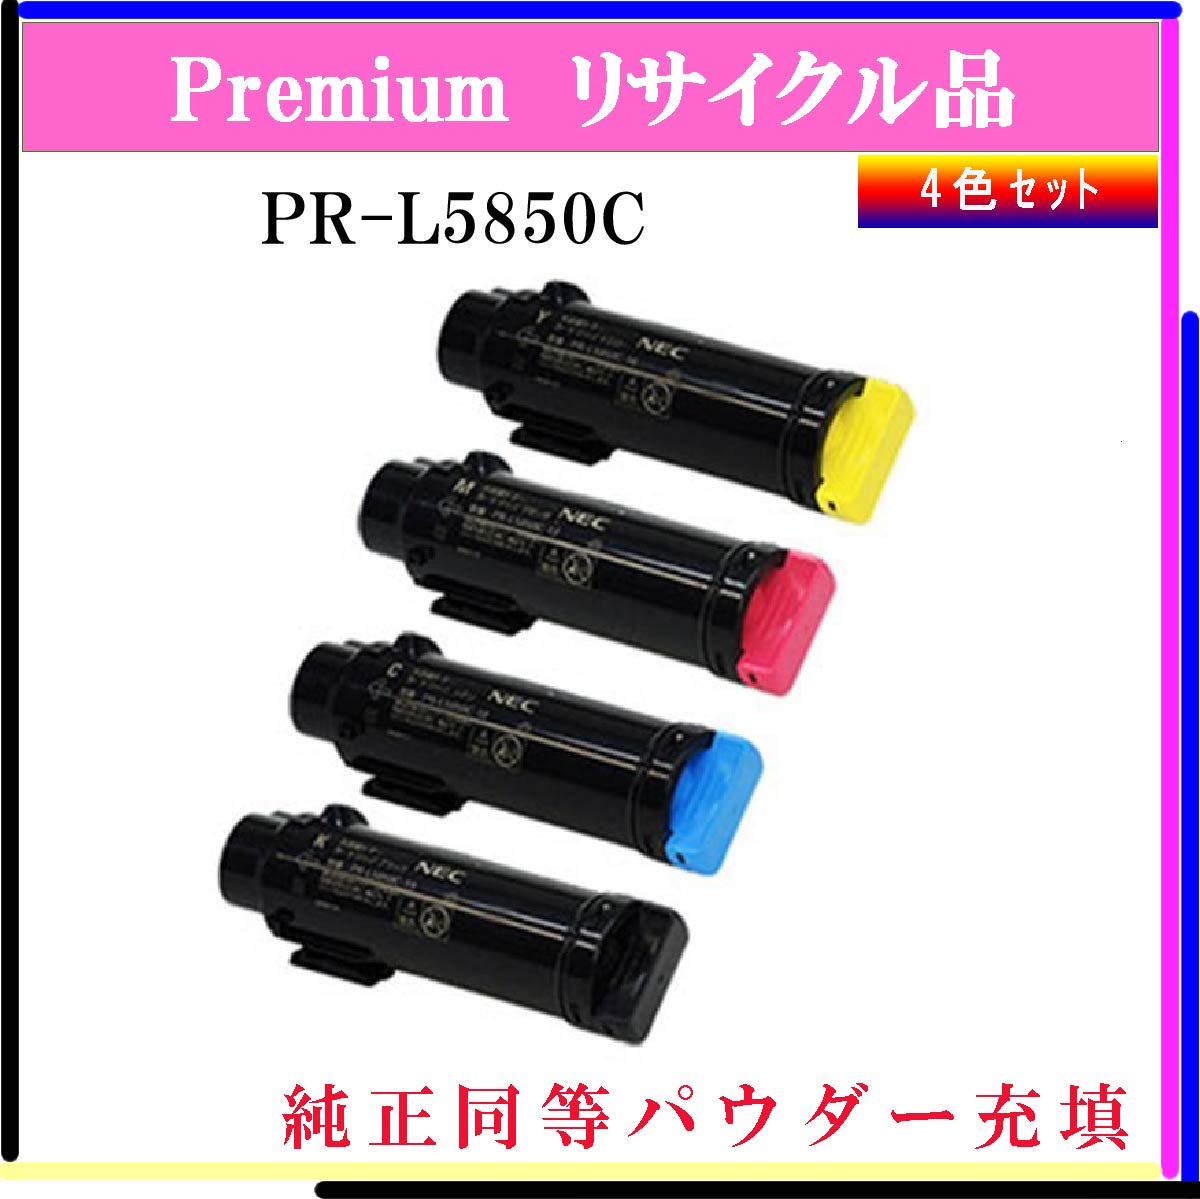 PR-L5850C (4色ｾｯﾄ) (純正同等ﾊﾟｳﾀﾞｰ)